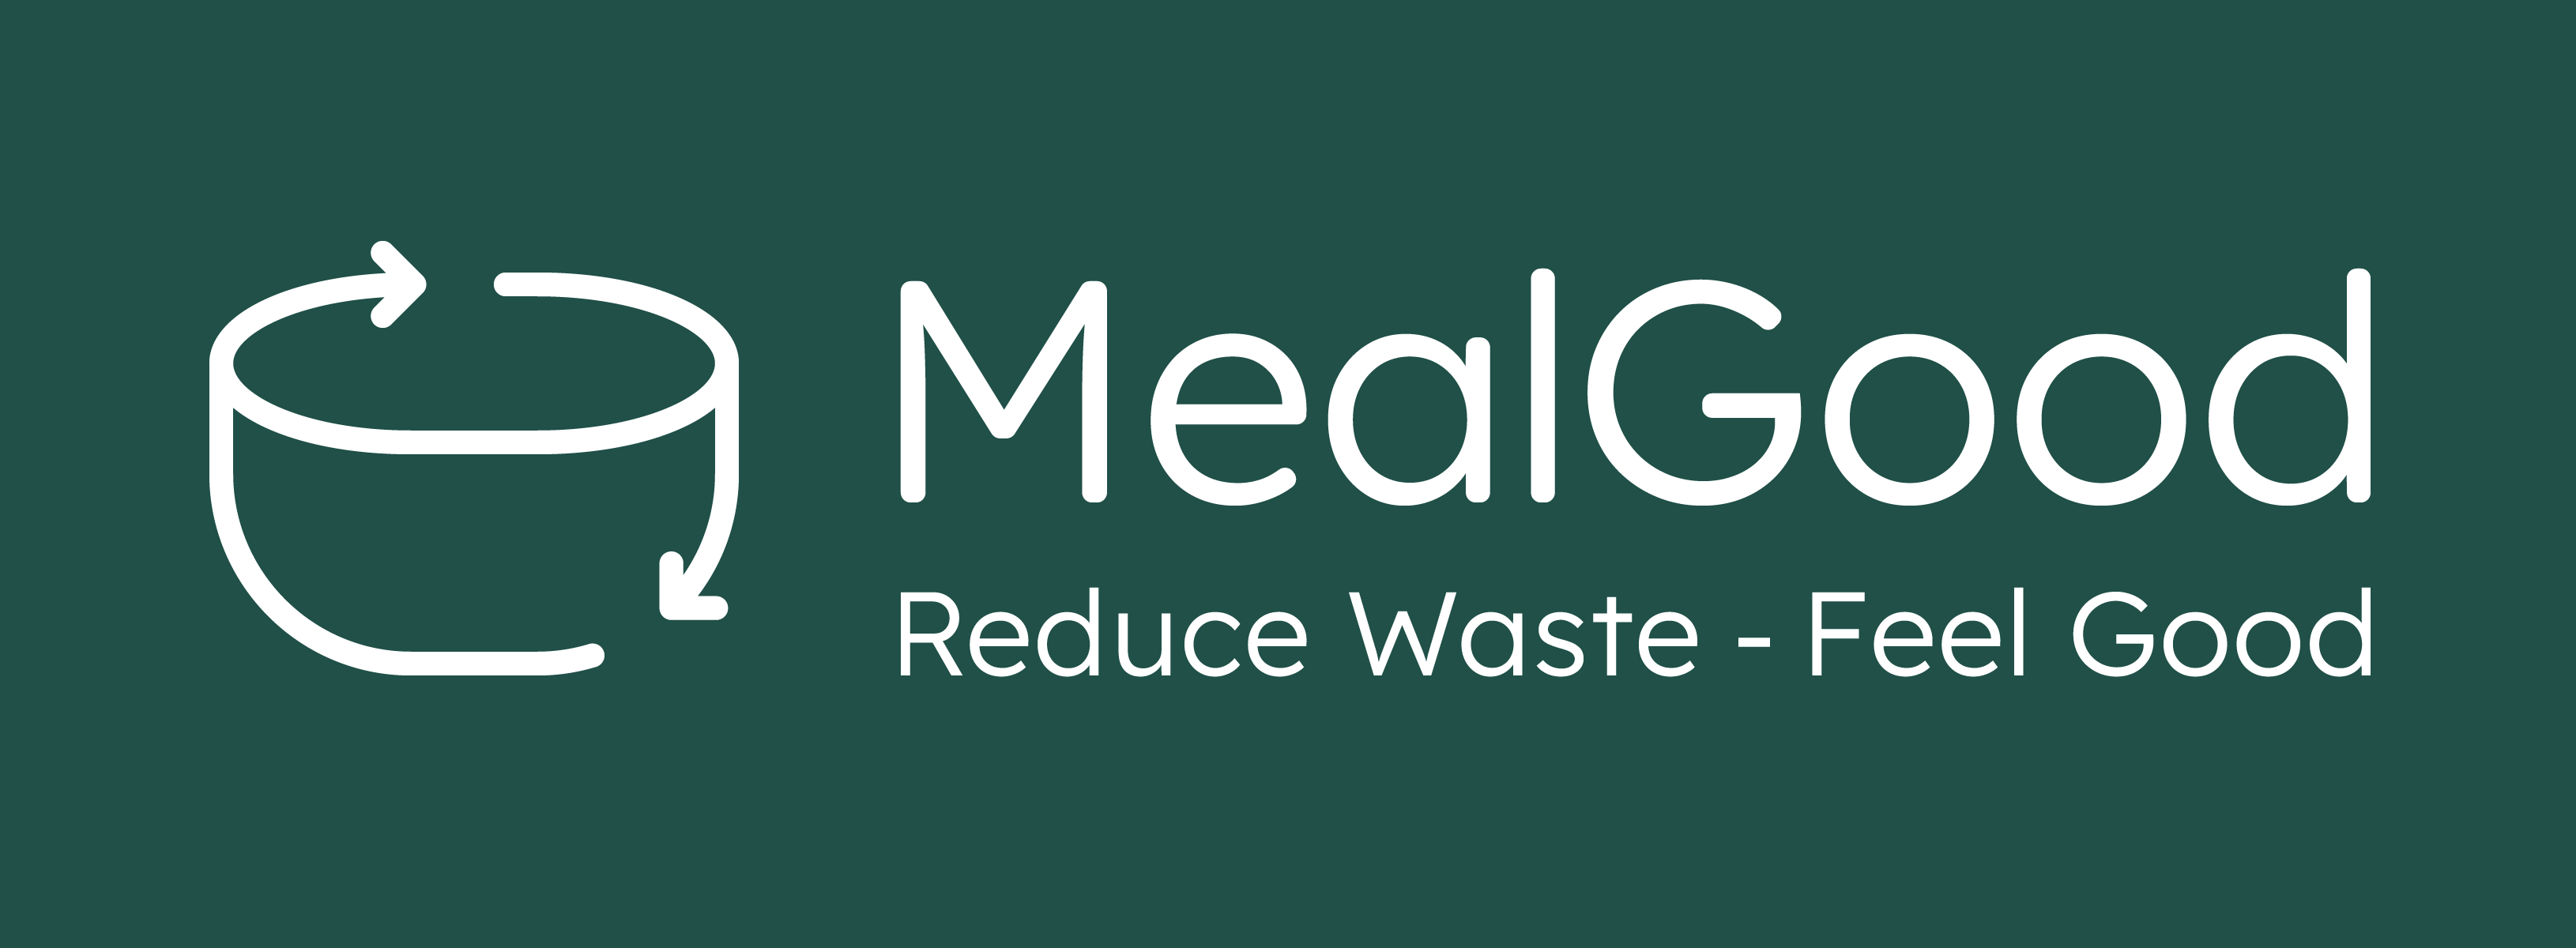 MealGood GmbH